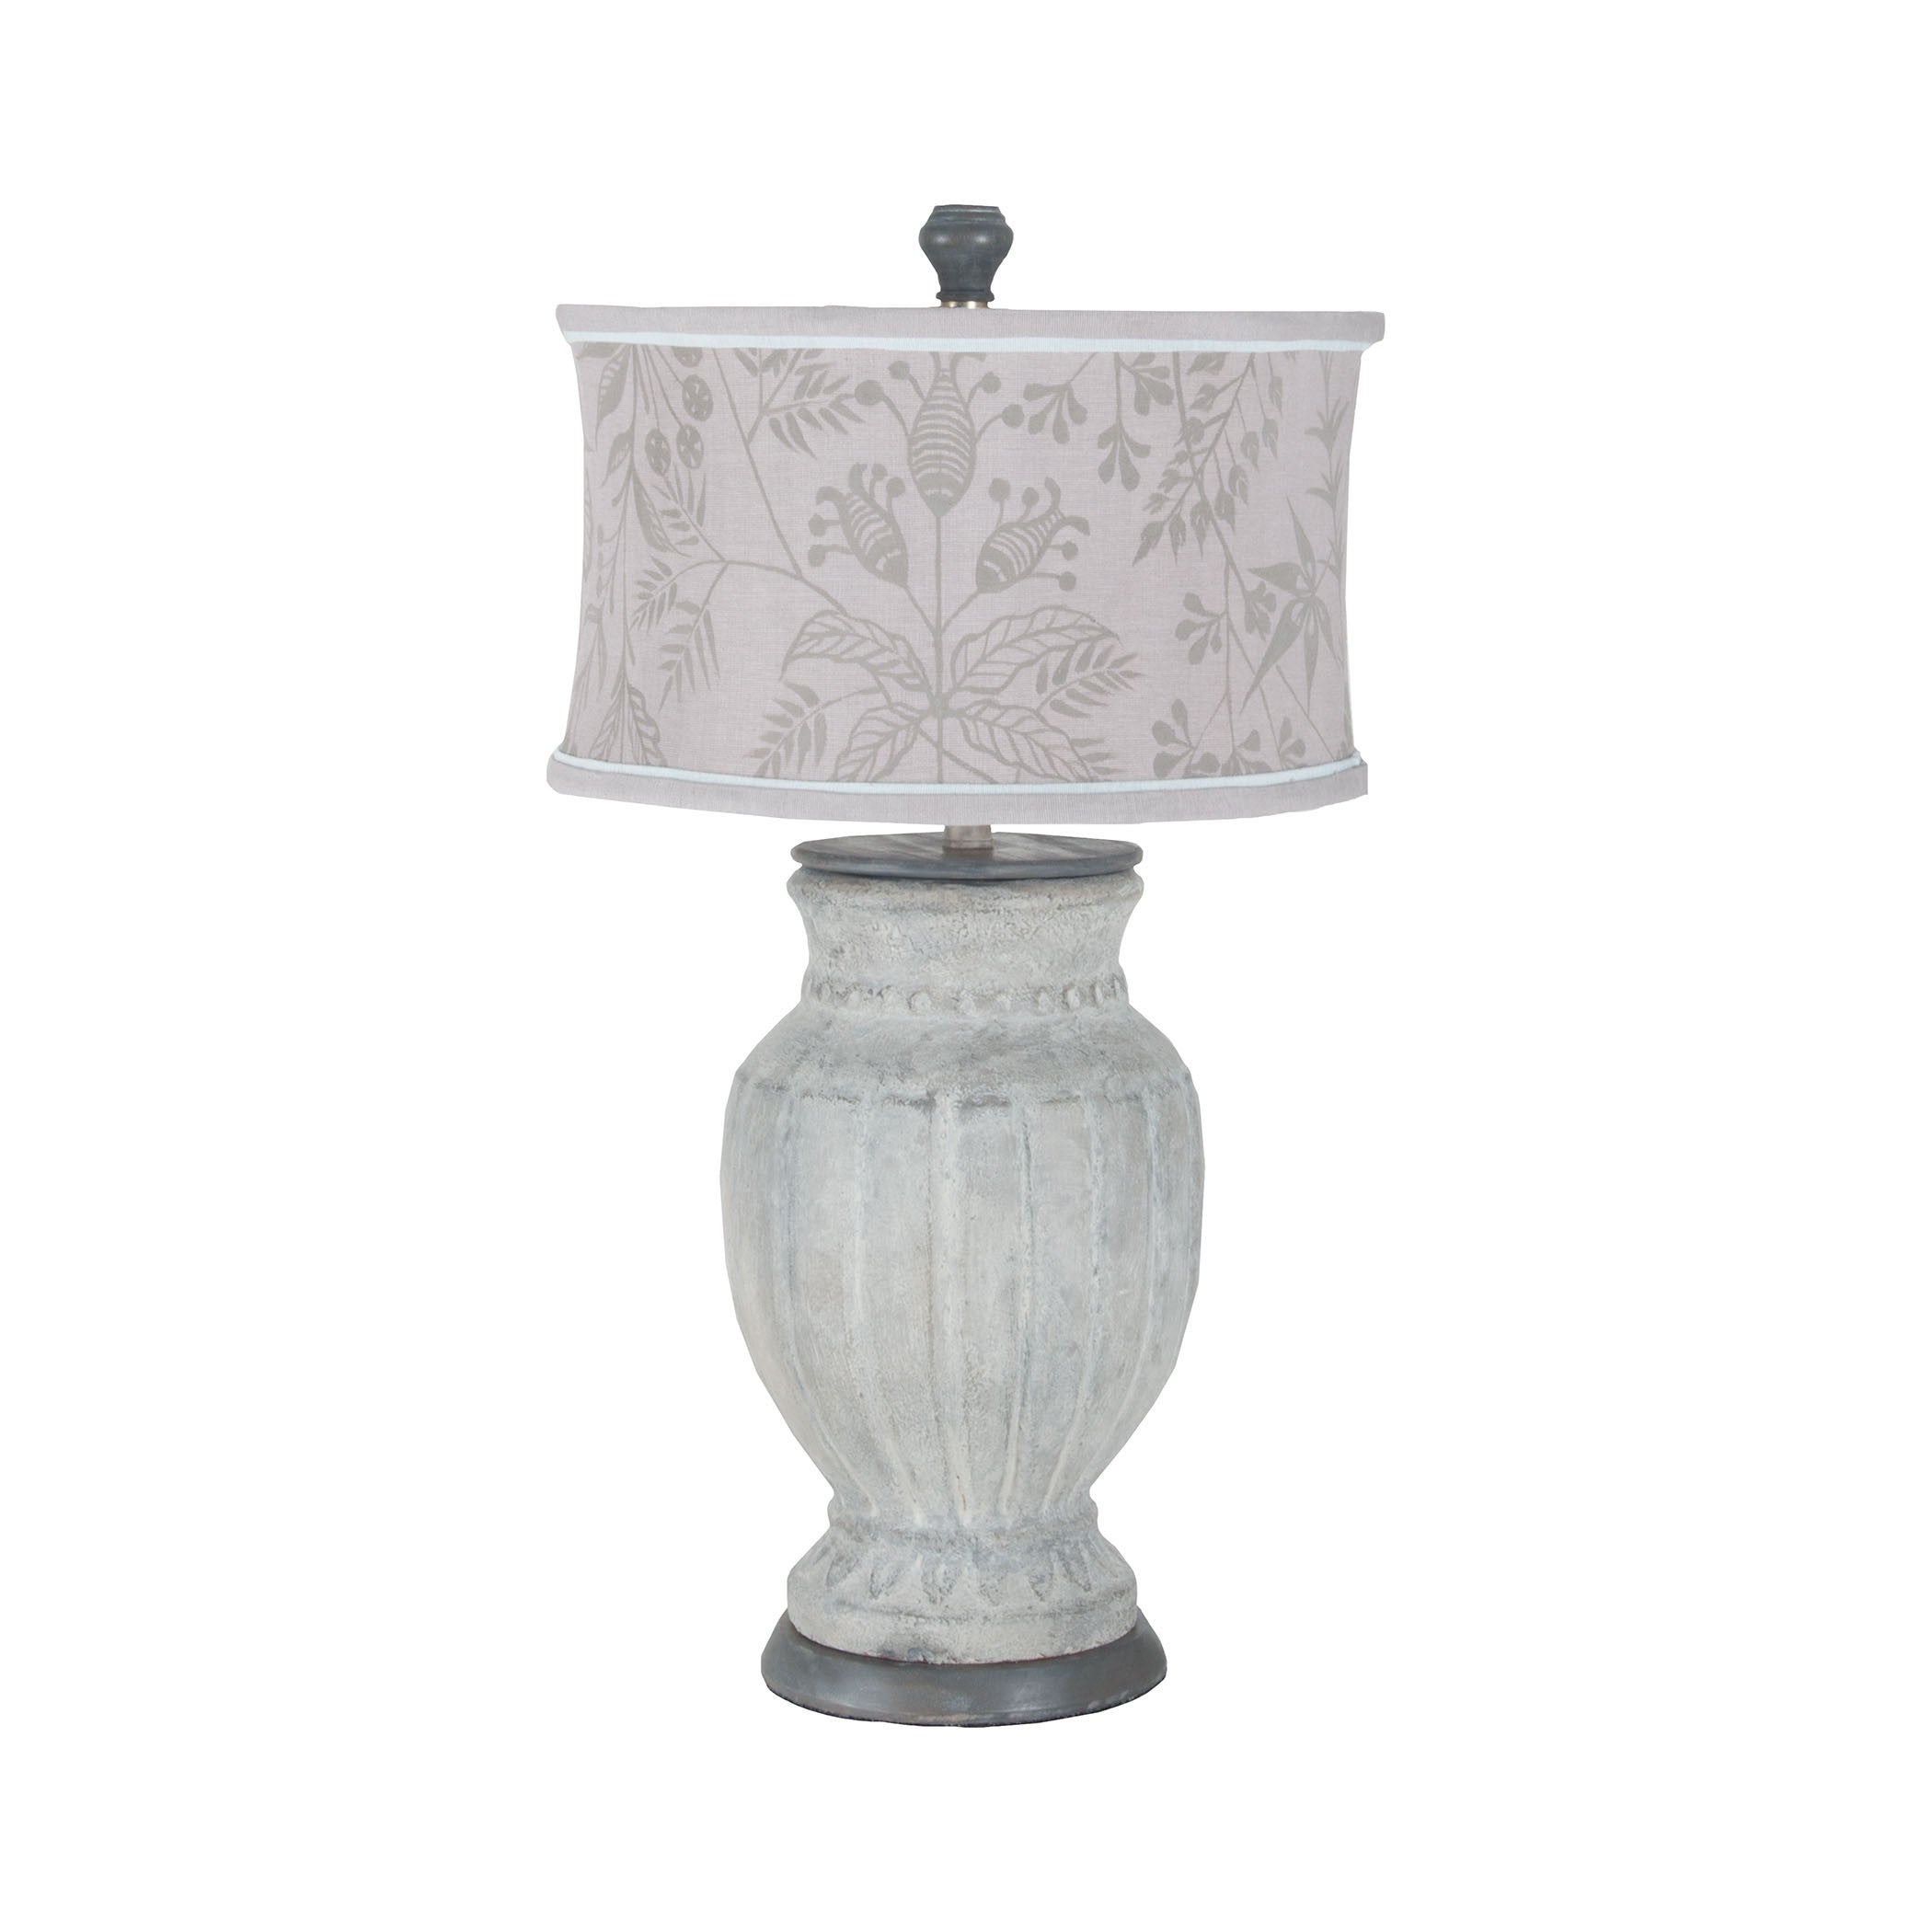 Guildmaster Gui-3516051 Parma Collection Concrete,handpainted Art Finish Table Lamp